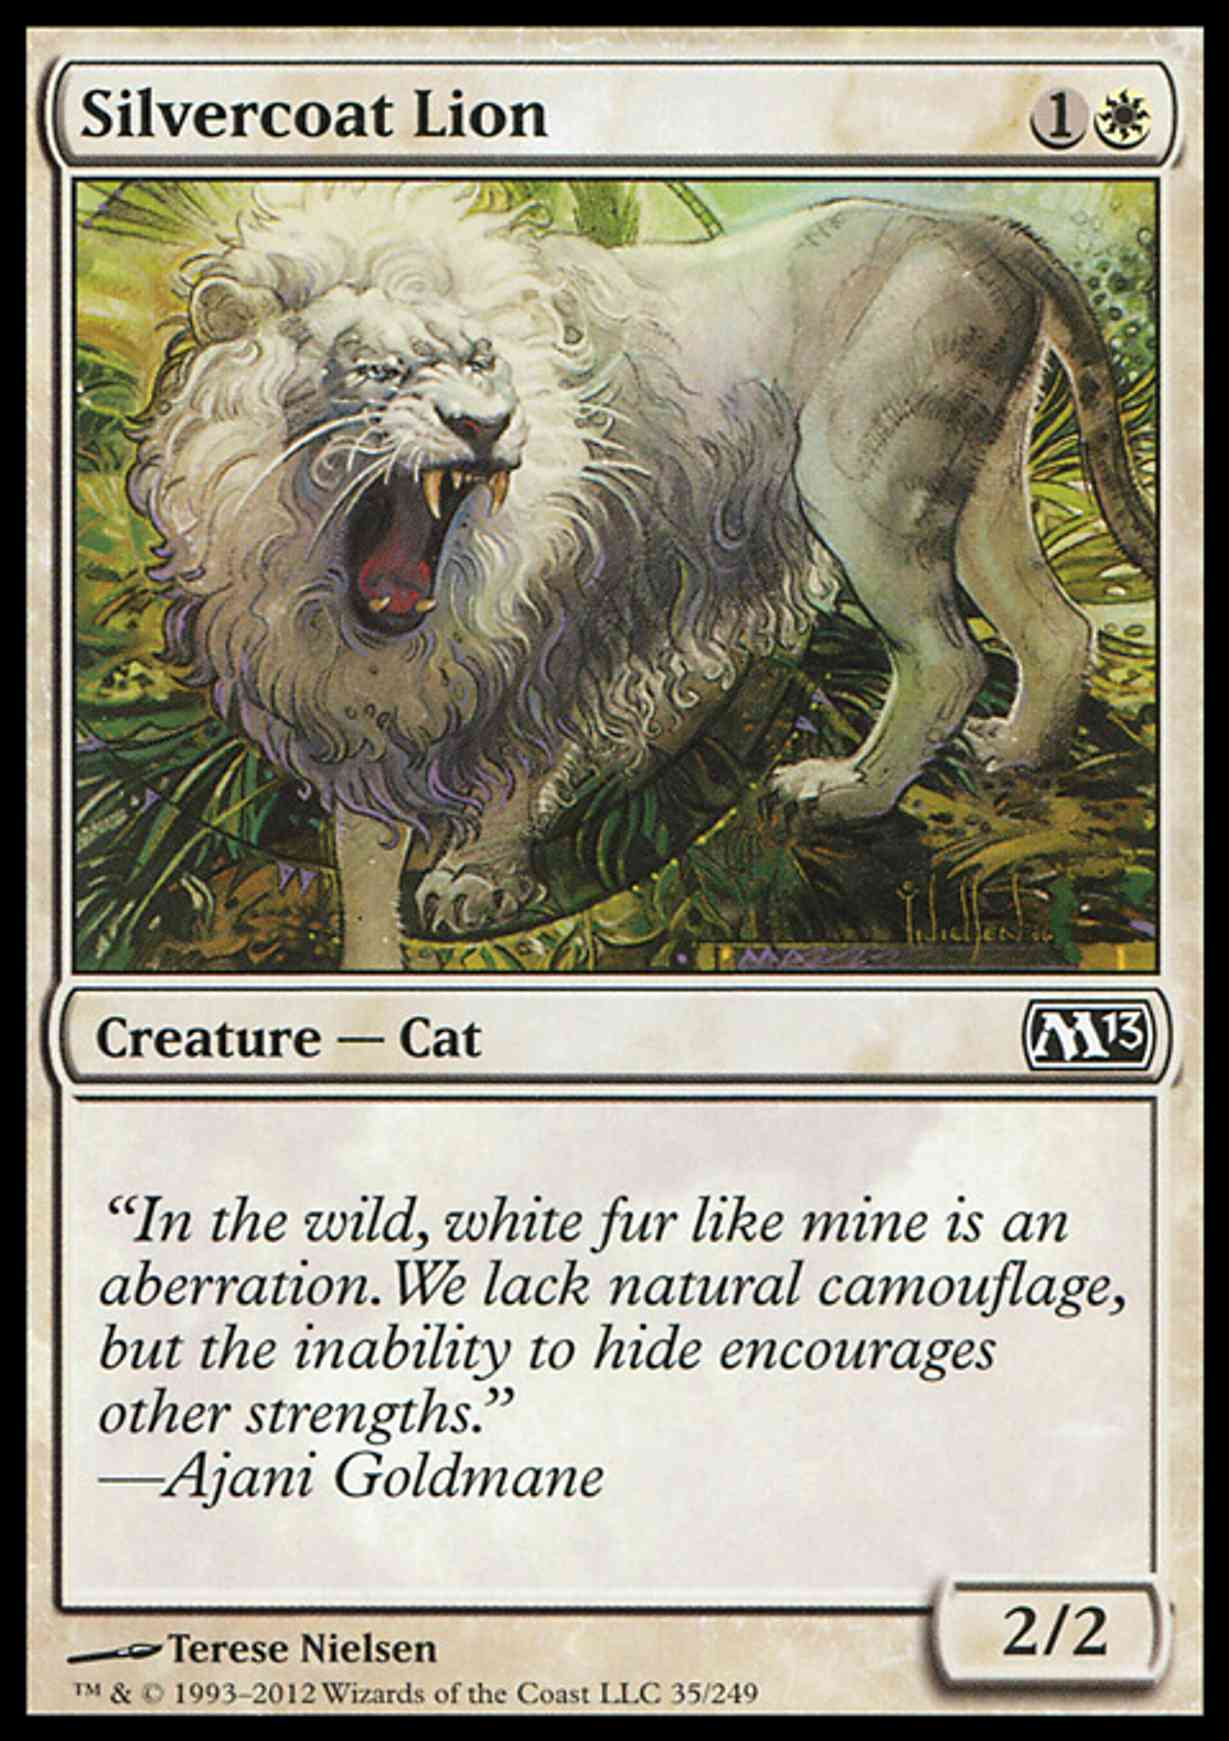 Silvercoat Lion magic card front